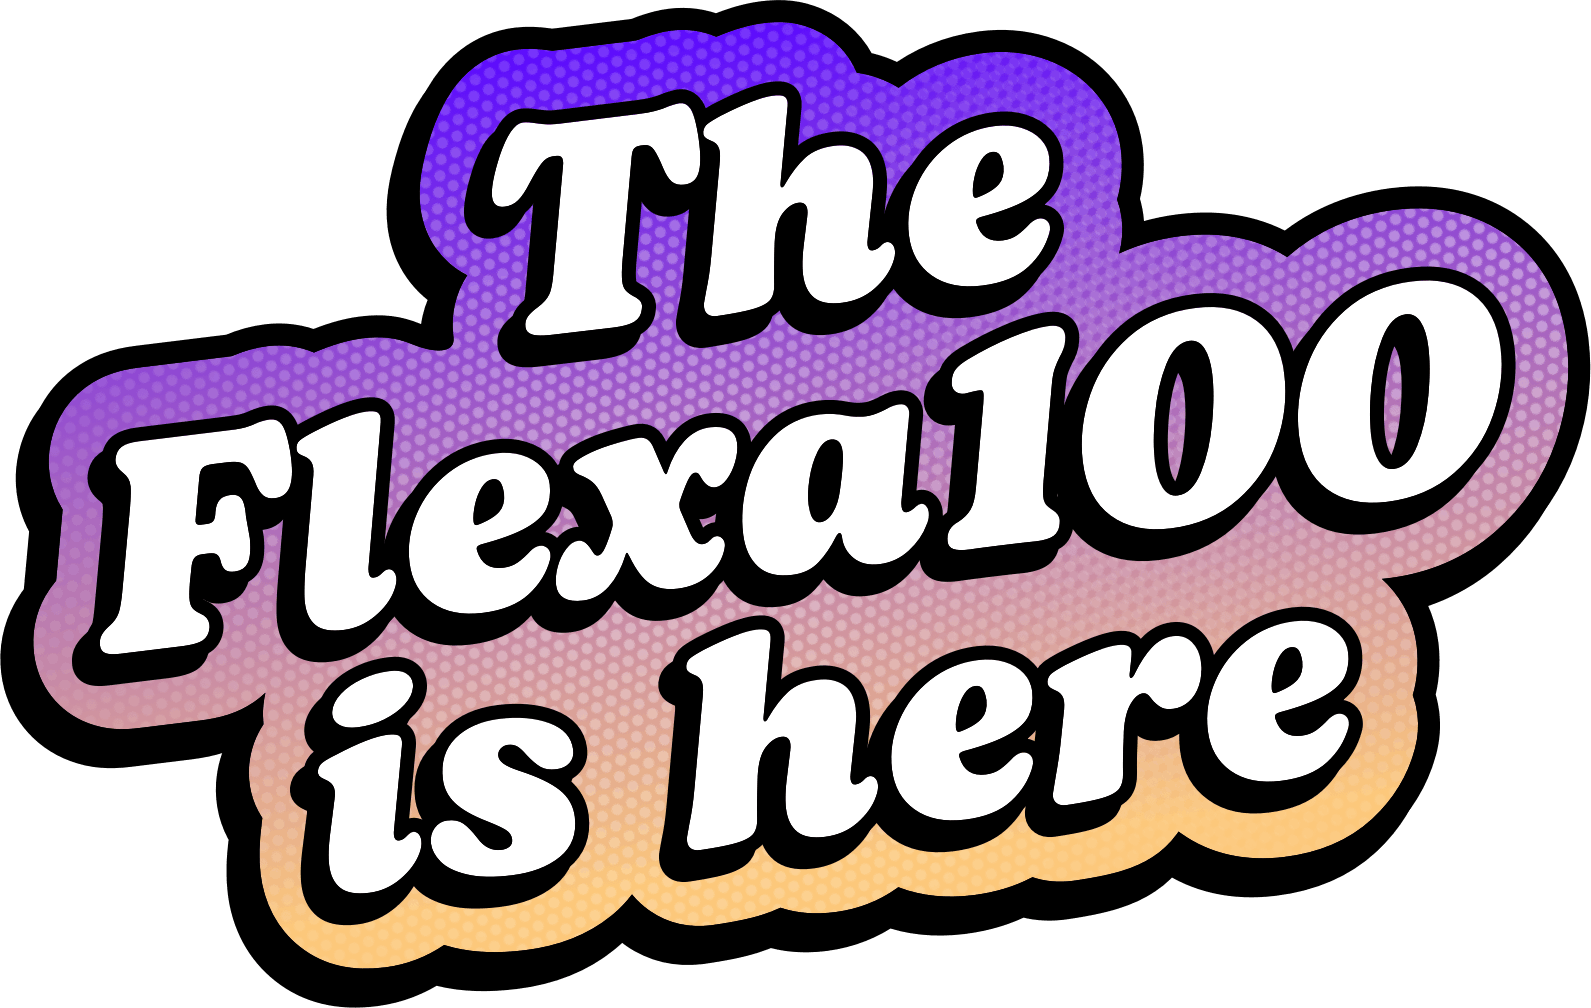 The Flexa100 is here